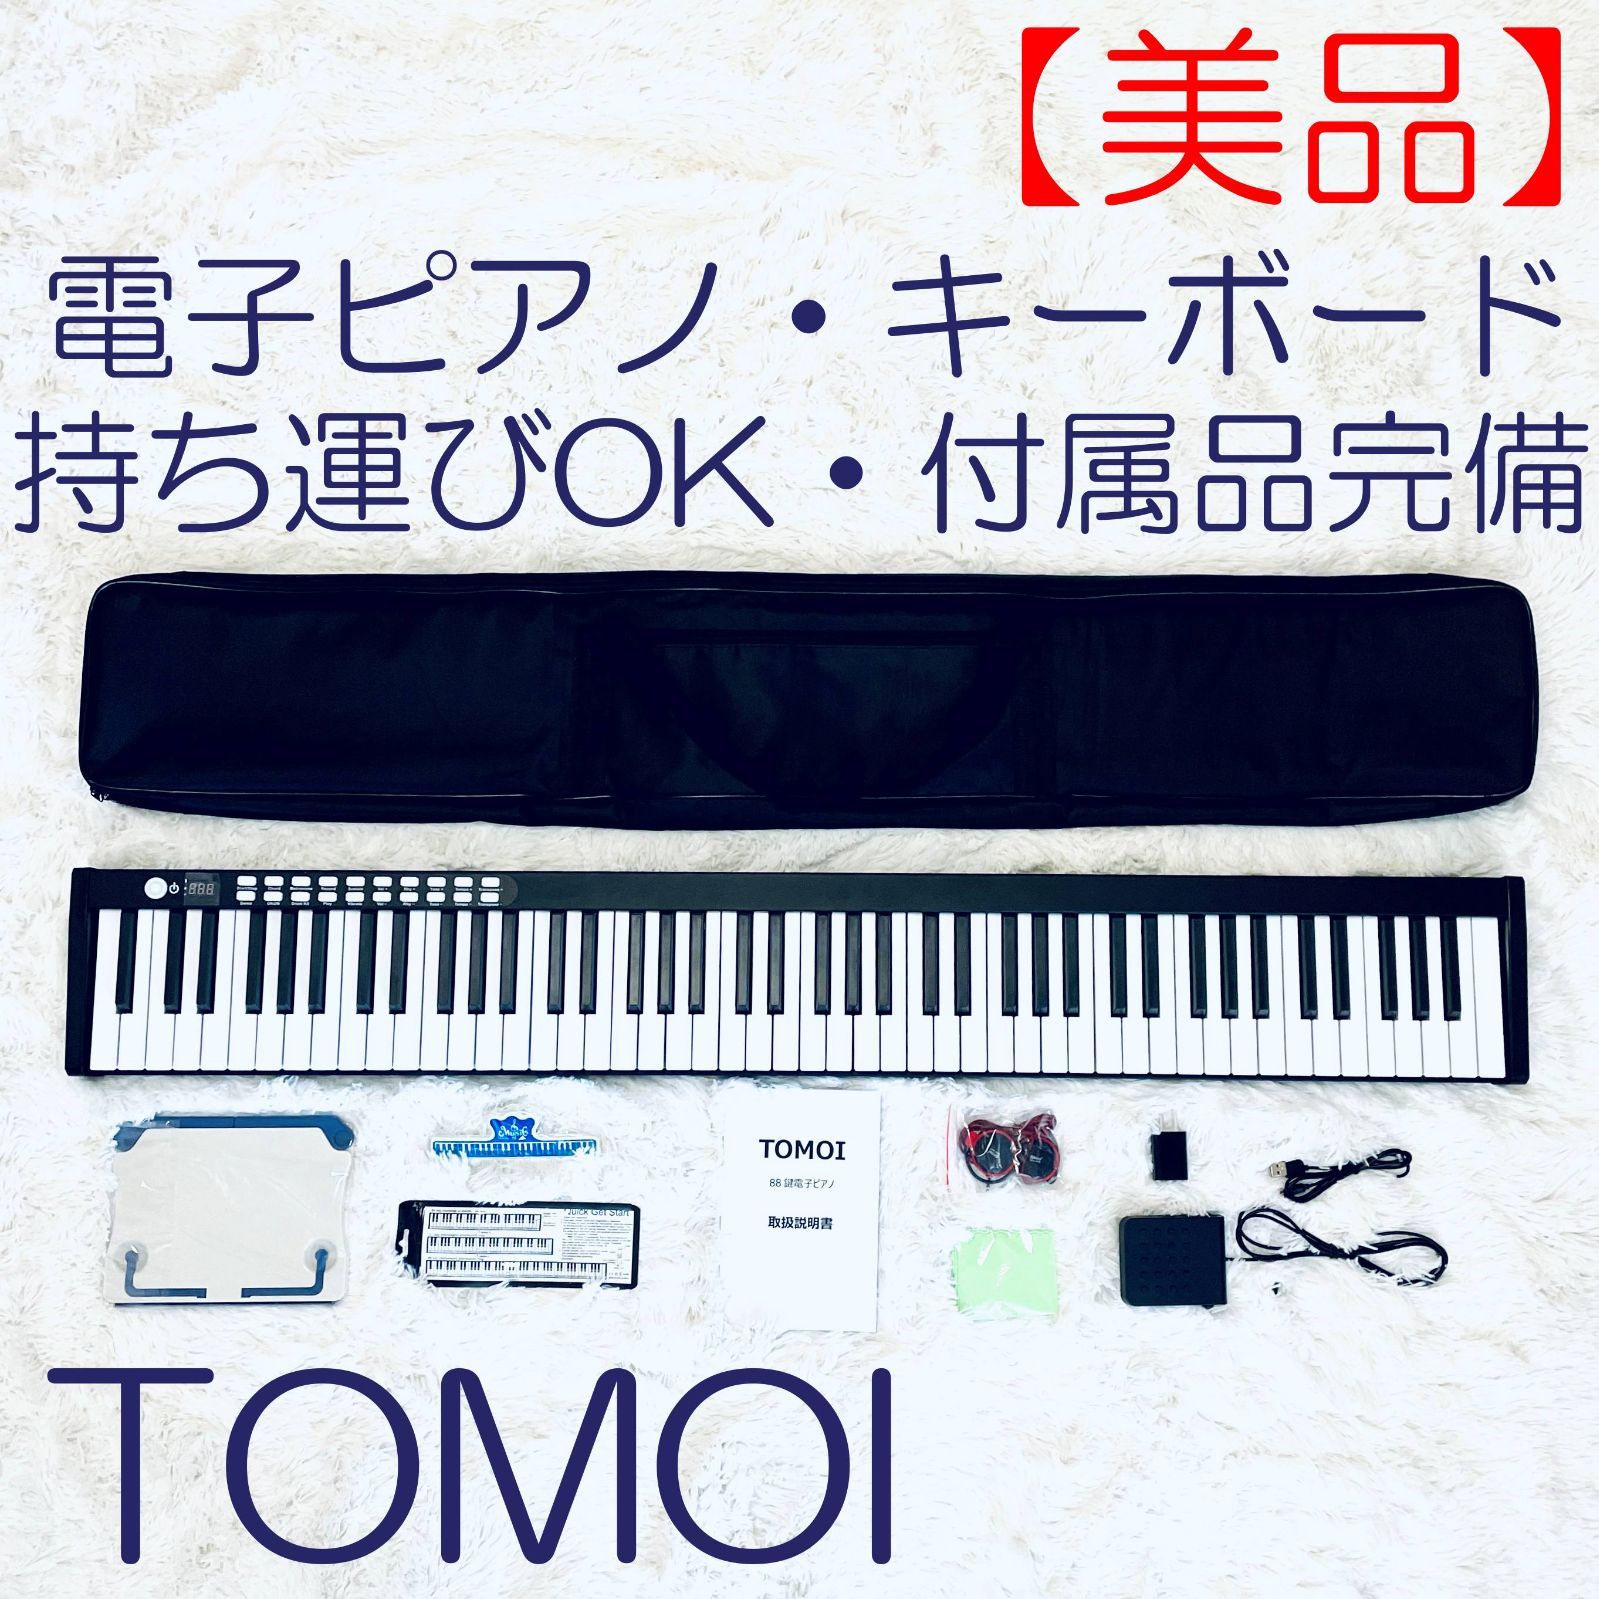 TOMOI 電子ピアノ キーボード 88鍵盤 付属品有り 【72%OFF!】 - 鍵盤楽器